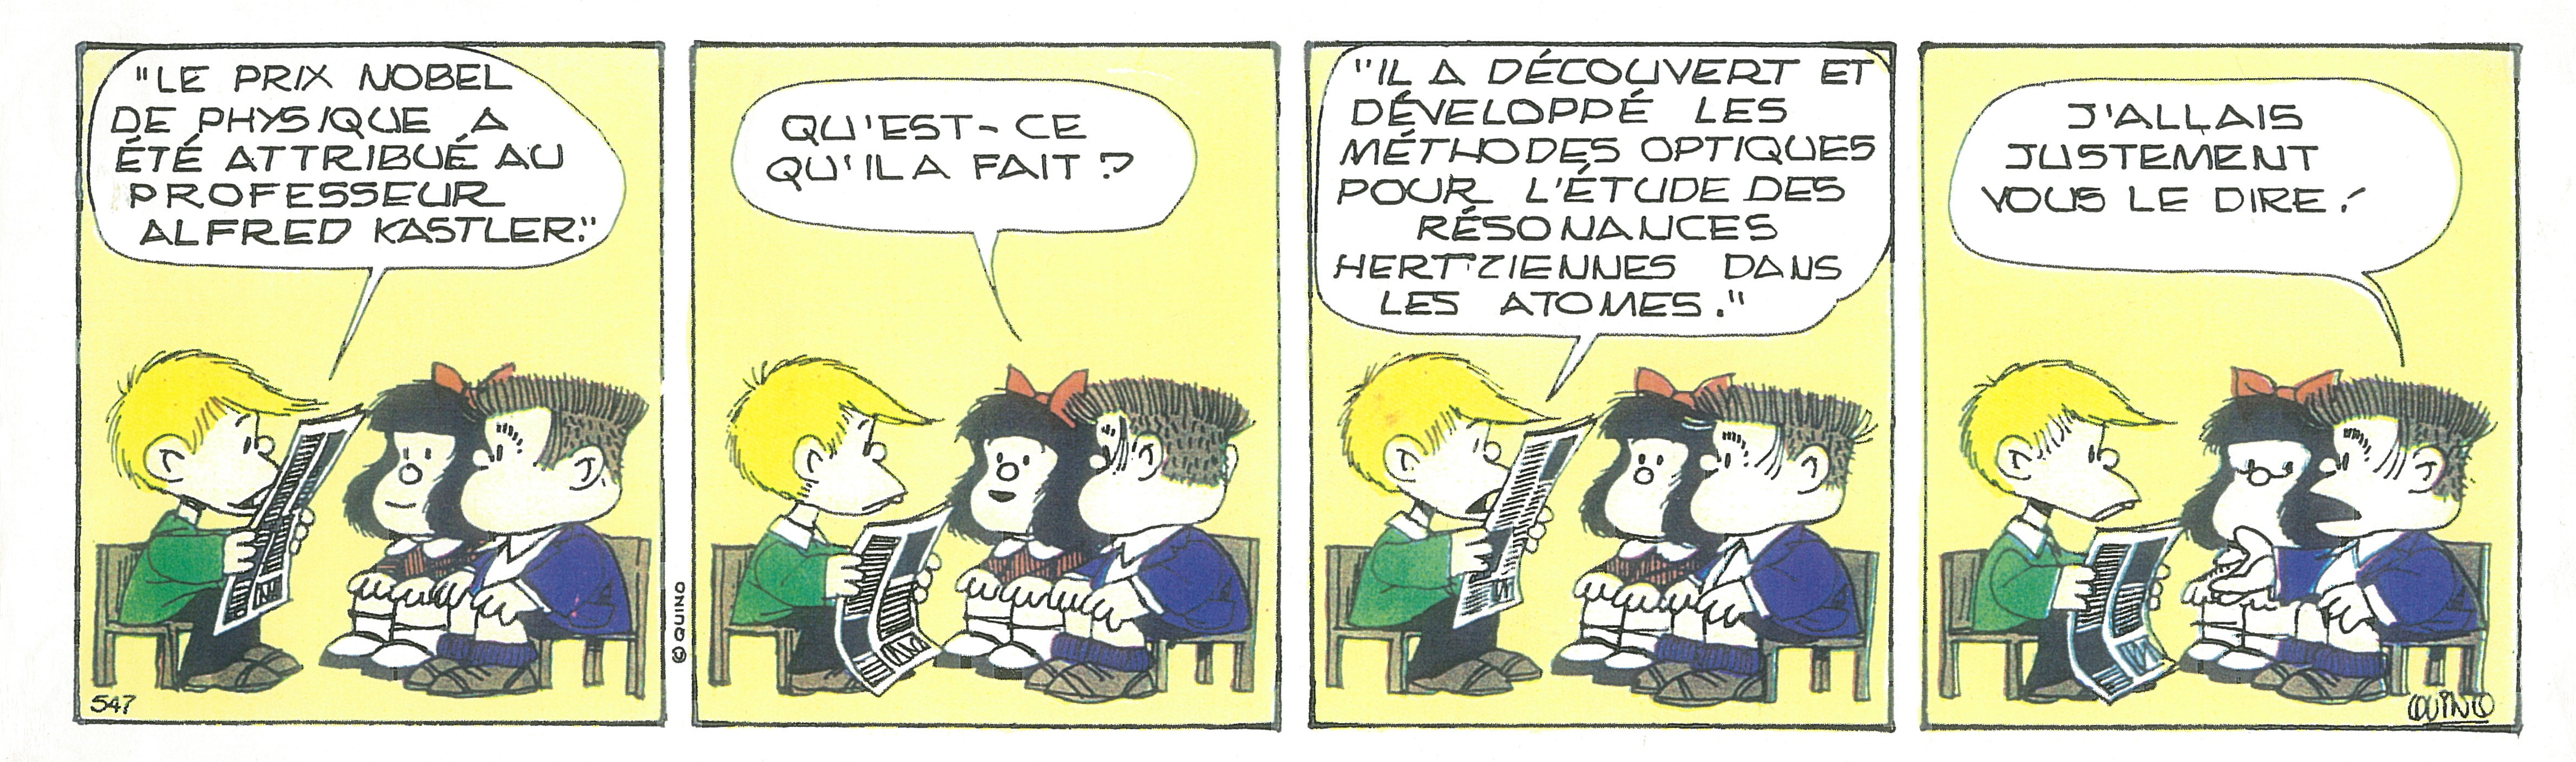 Accss-FnAK-Alfred-Kastler-Mafalda